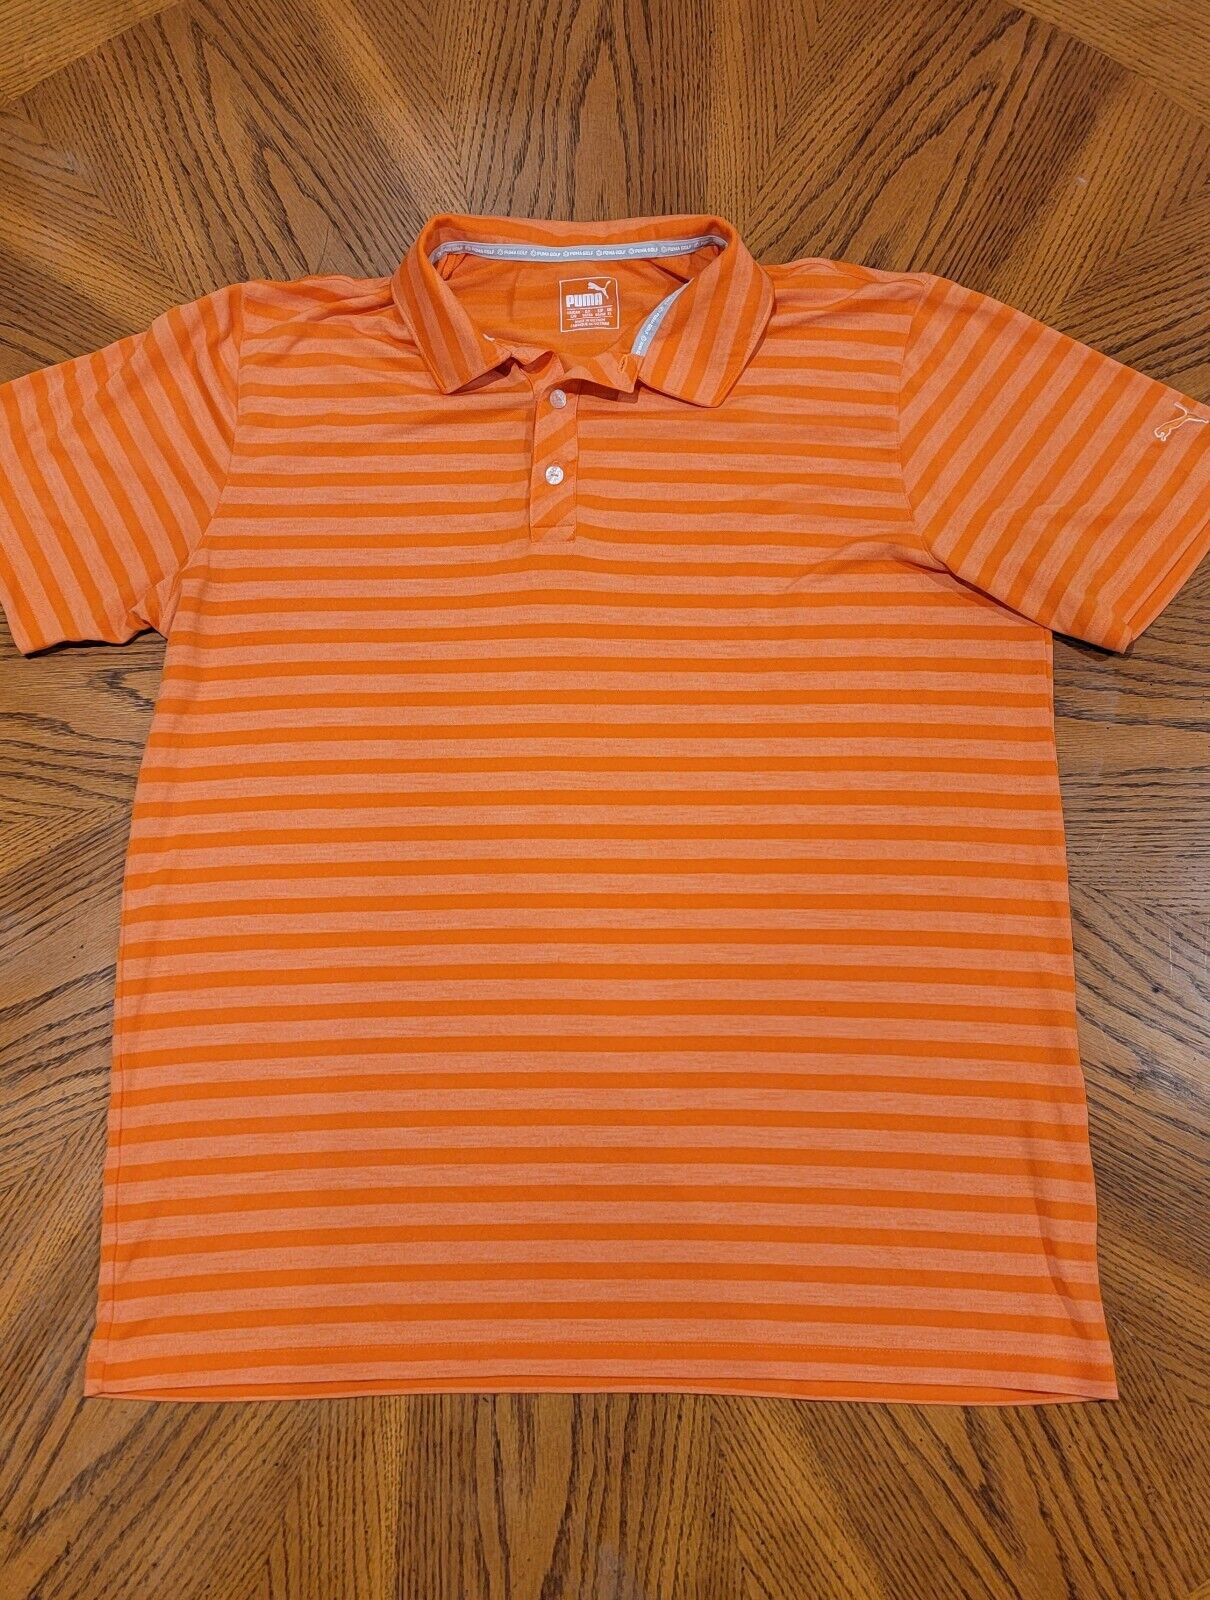 Puma Golf Dry Cell Orange - Men\'s - Large